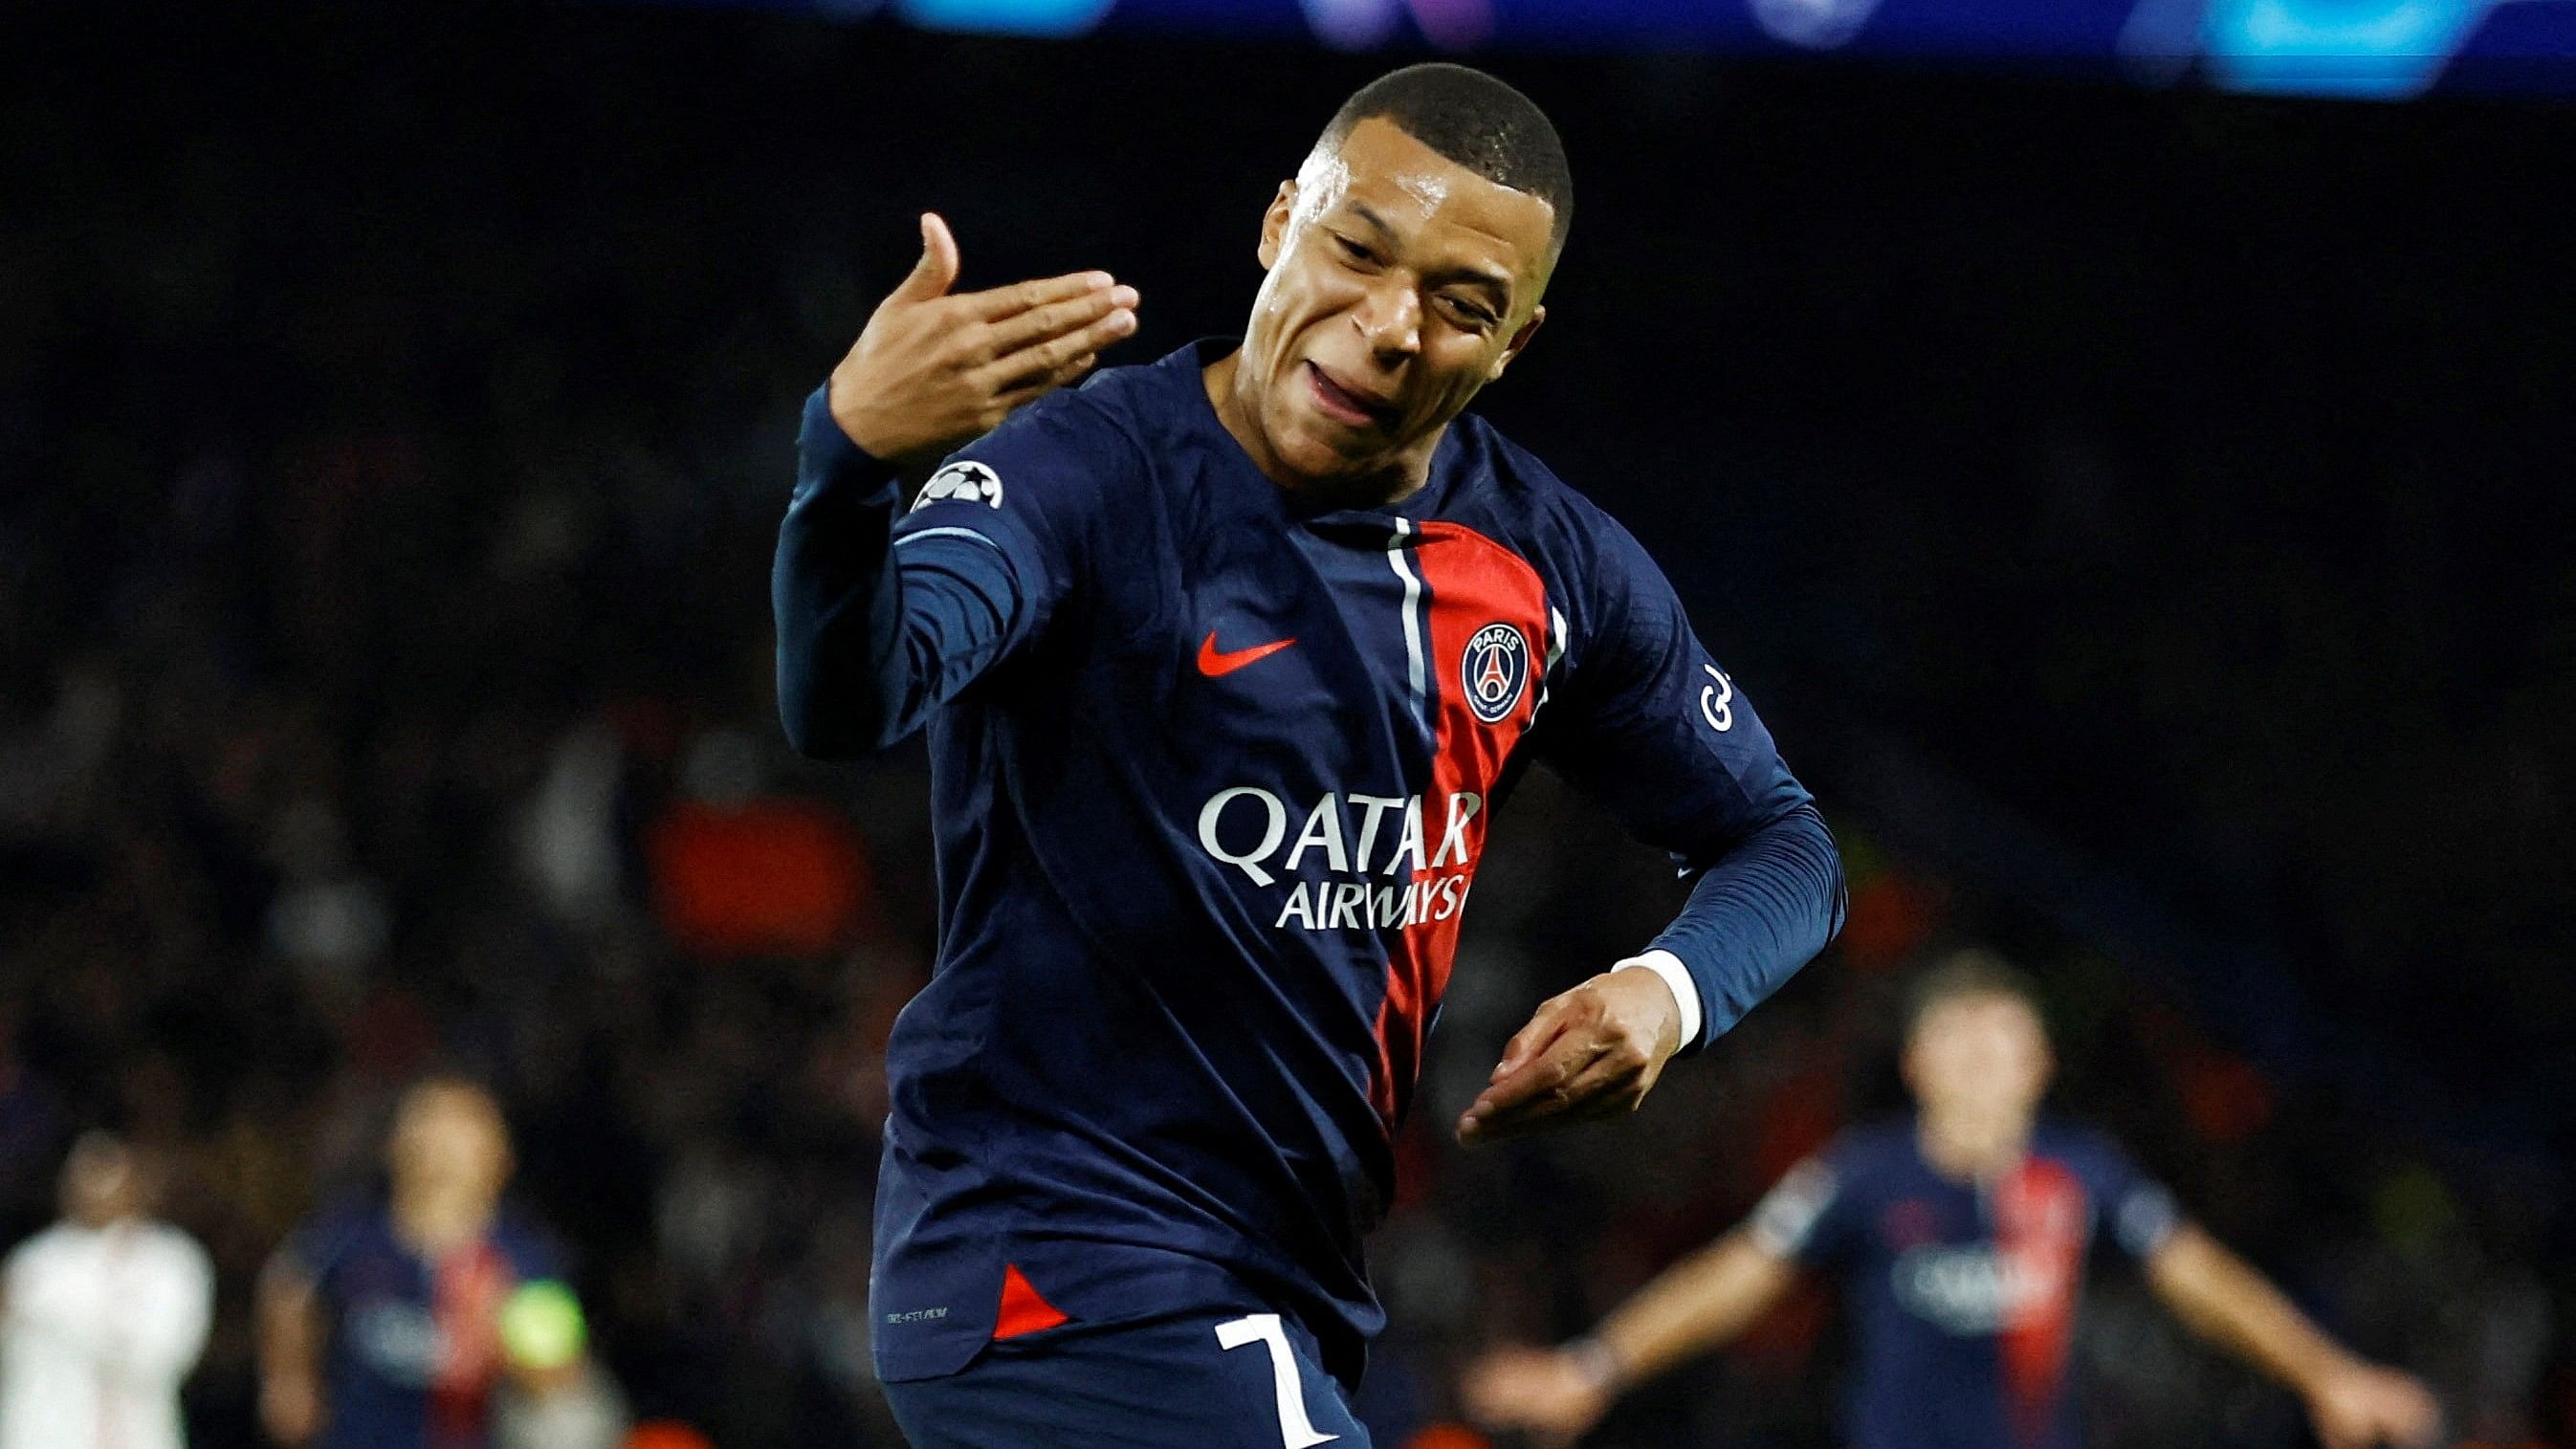 <div class="paragraphs"><p>Paris St Germain's Kylian Mbappe celebrates scoring their first goal.</p></div>